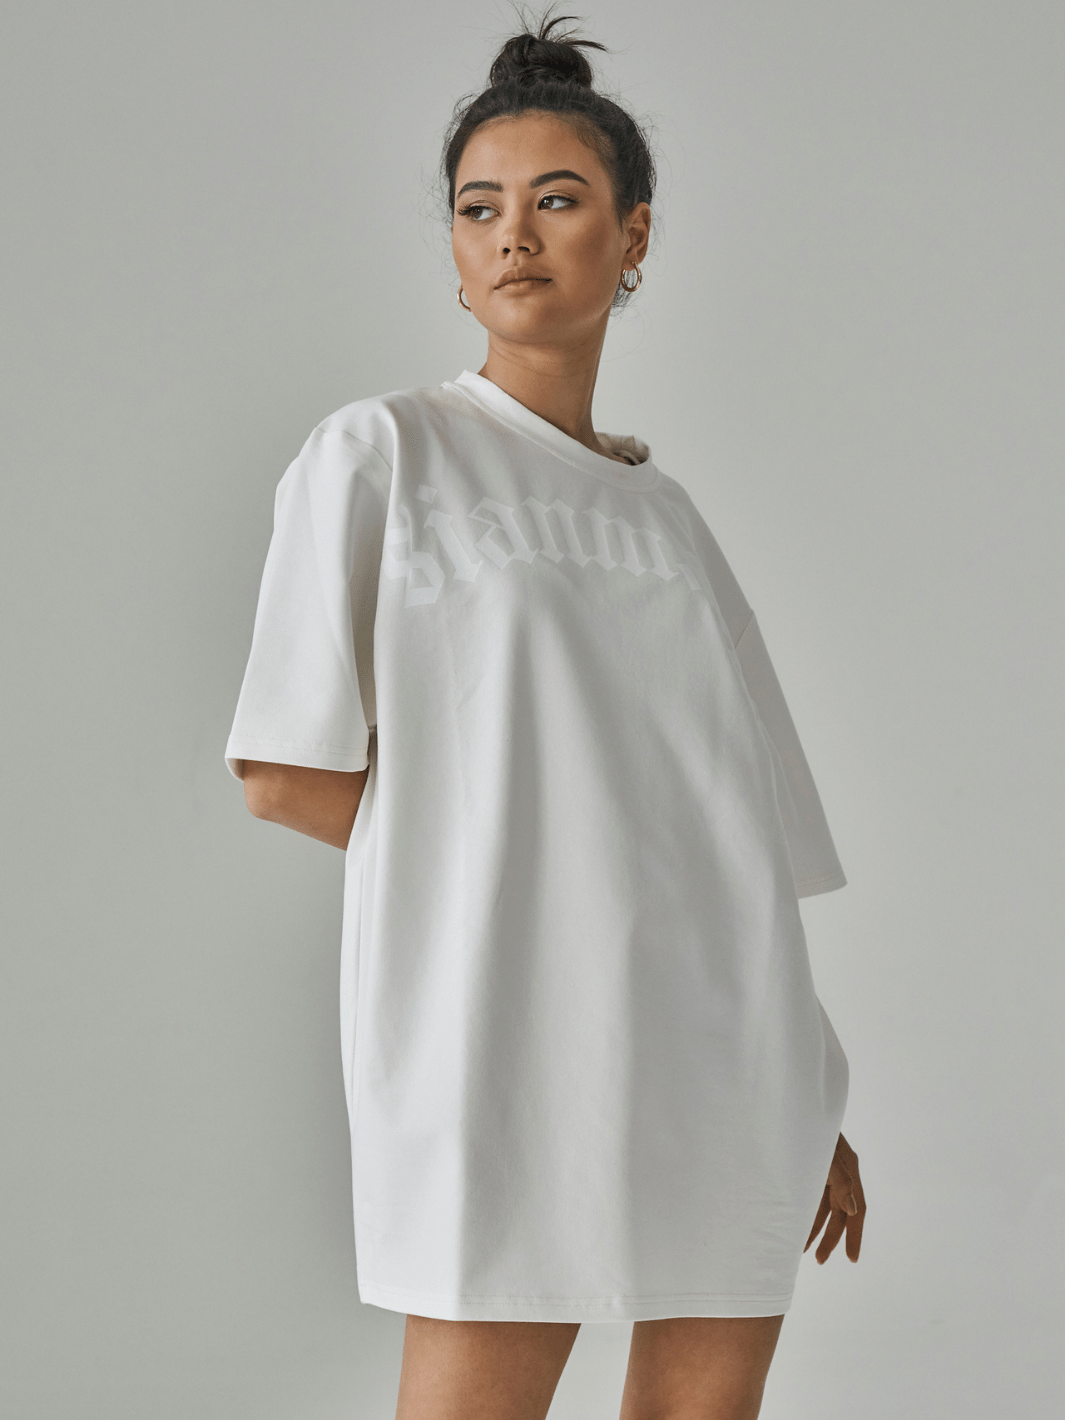 Sian Marie lounge XL / Off White Oversized T-Shirt Slogan Print - Nude XL